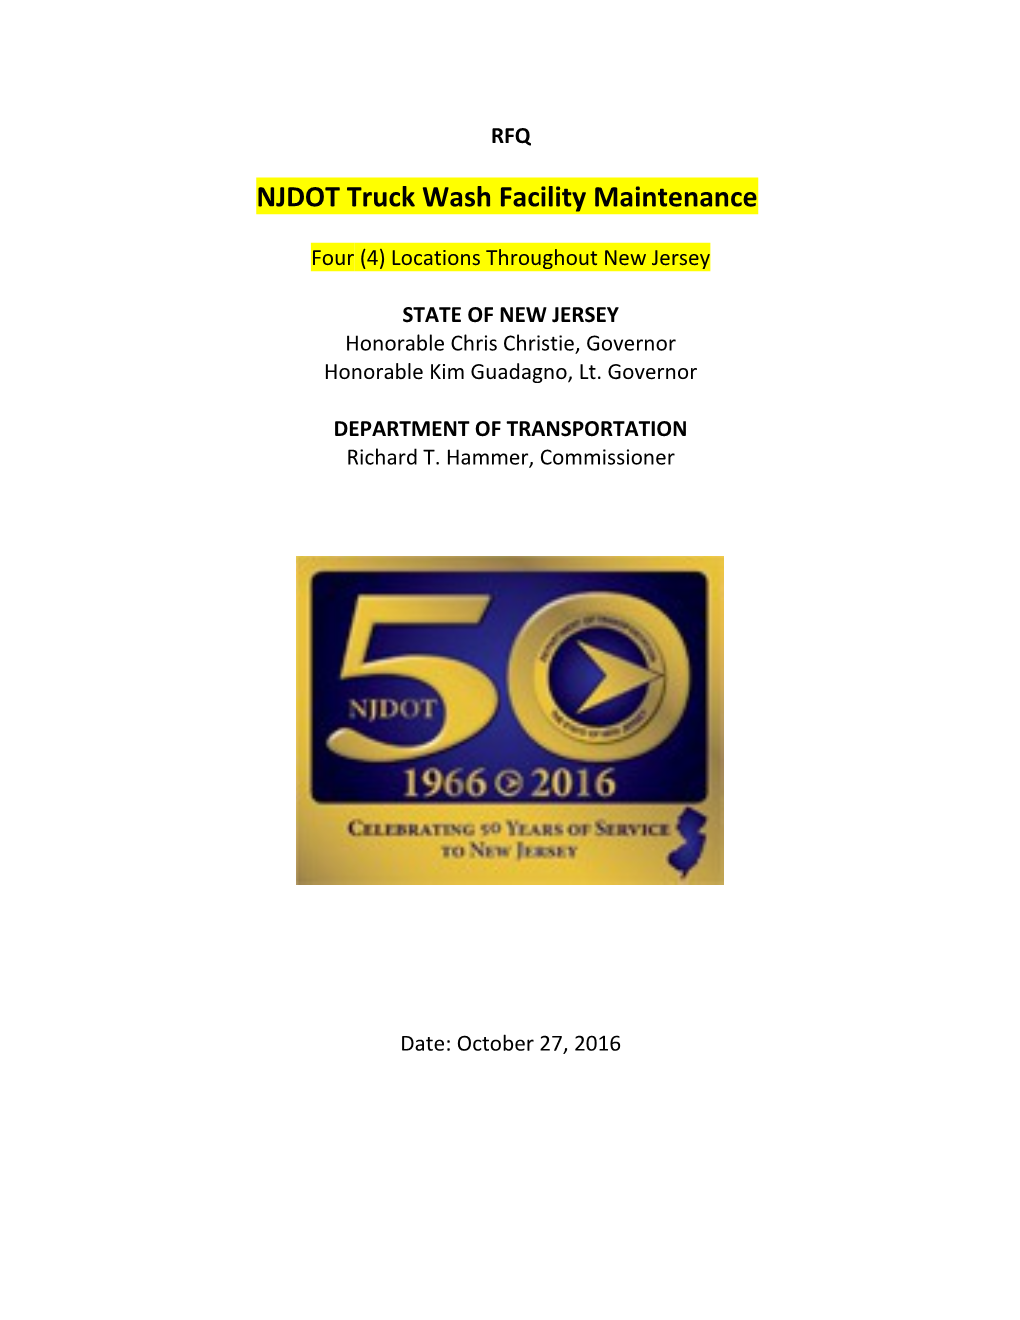 NJDOT Truck Wash Facility Maintenance